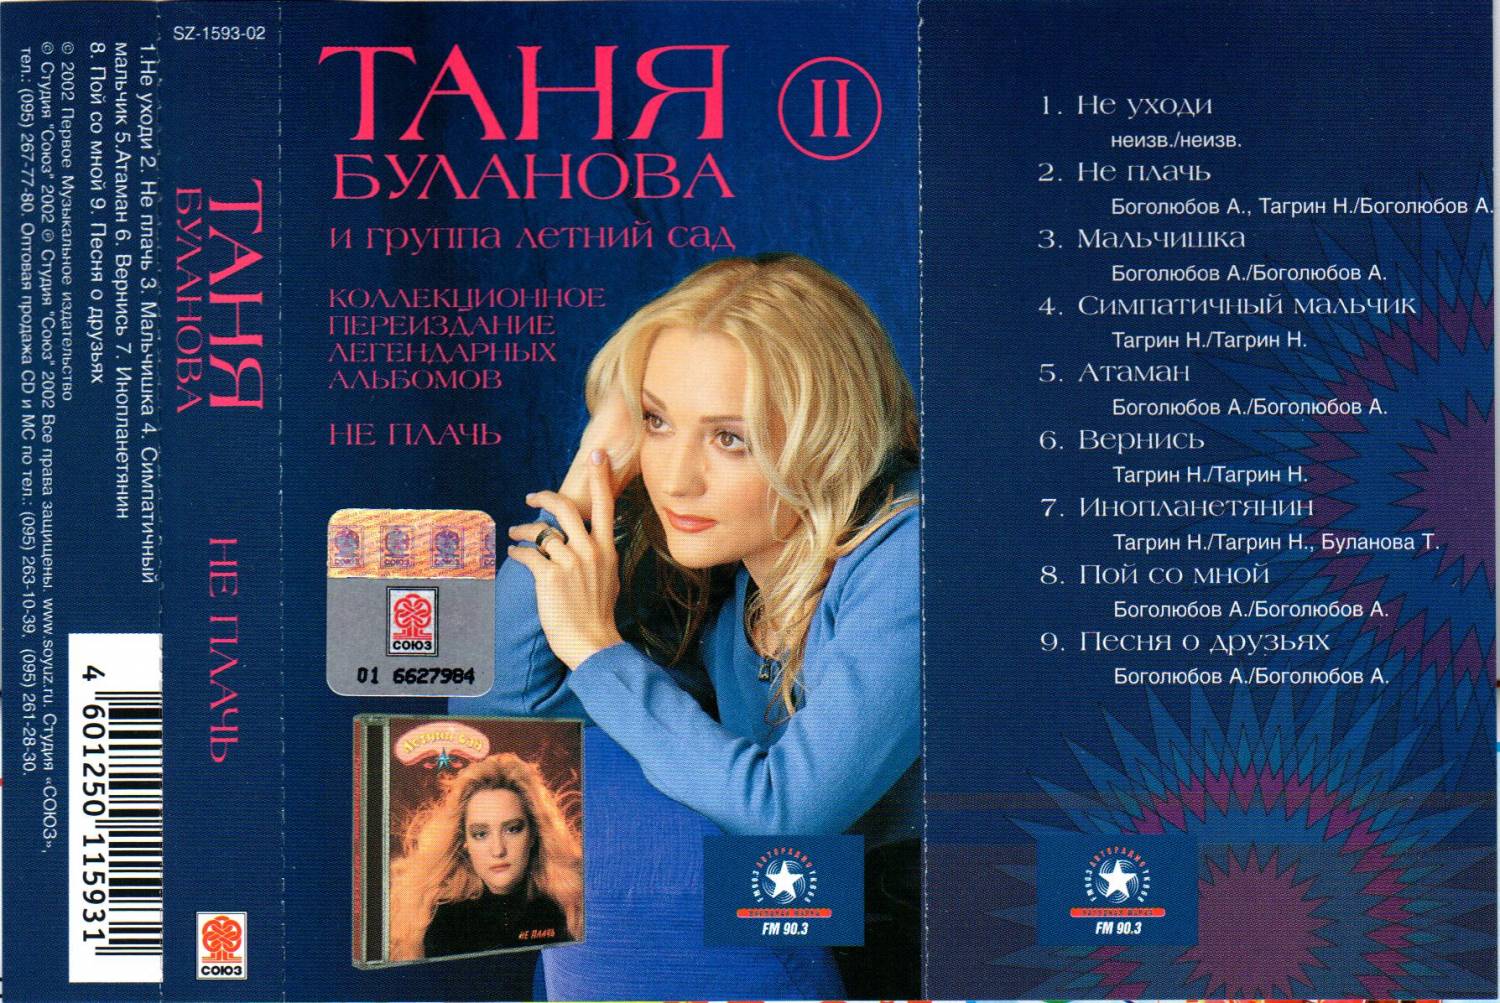 Вернись на 1 песню. Летний сад Буланова кассета. Таня Буланова 1991. Аудиокассеты Таня Буланова 2001. Буланова 2002.